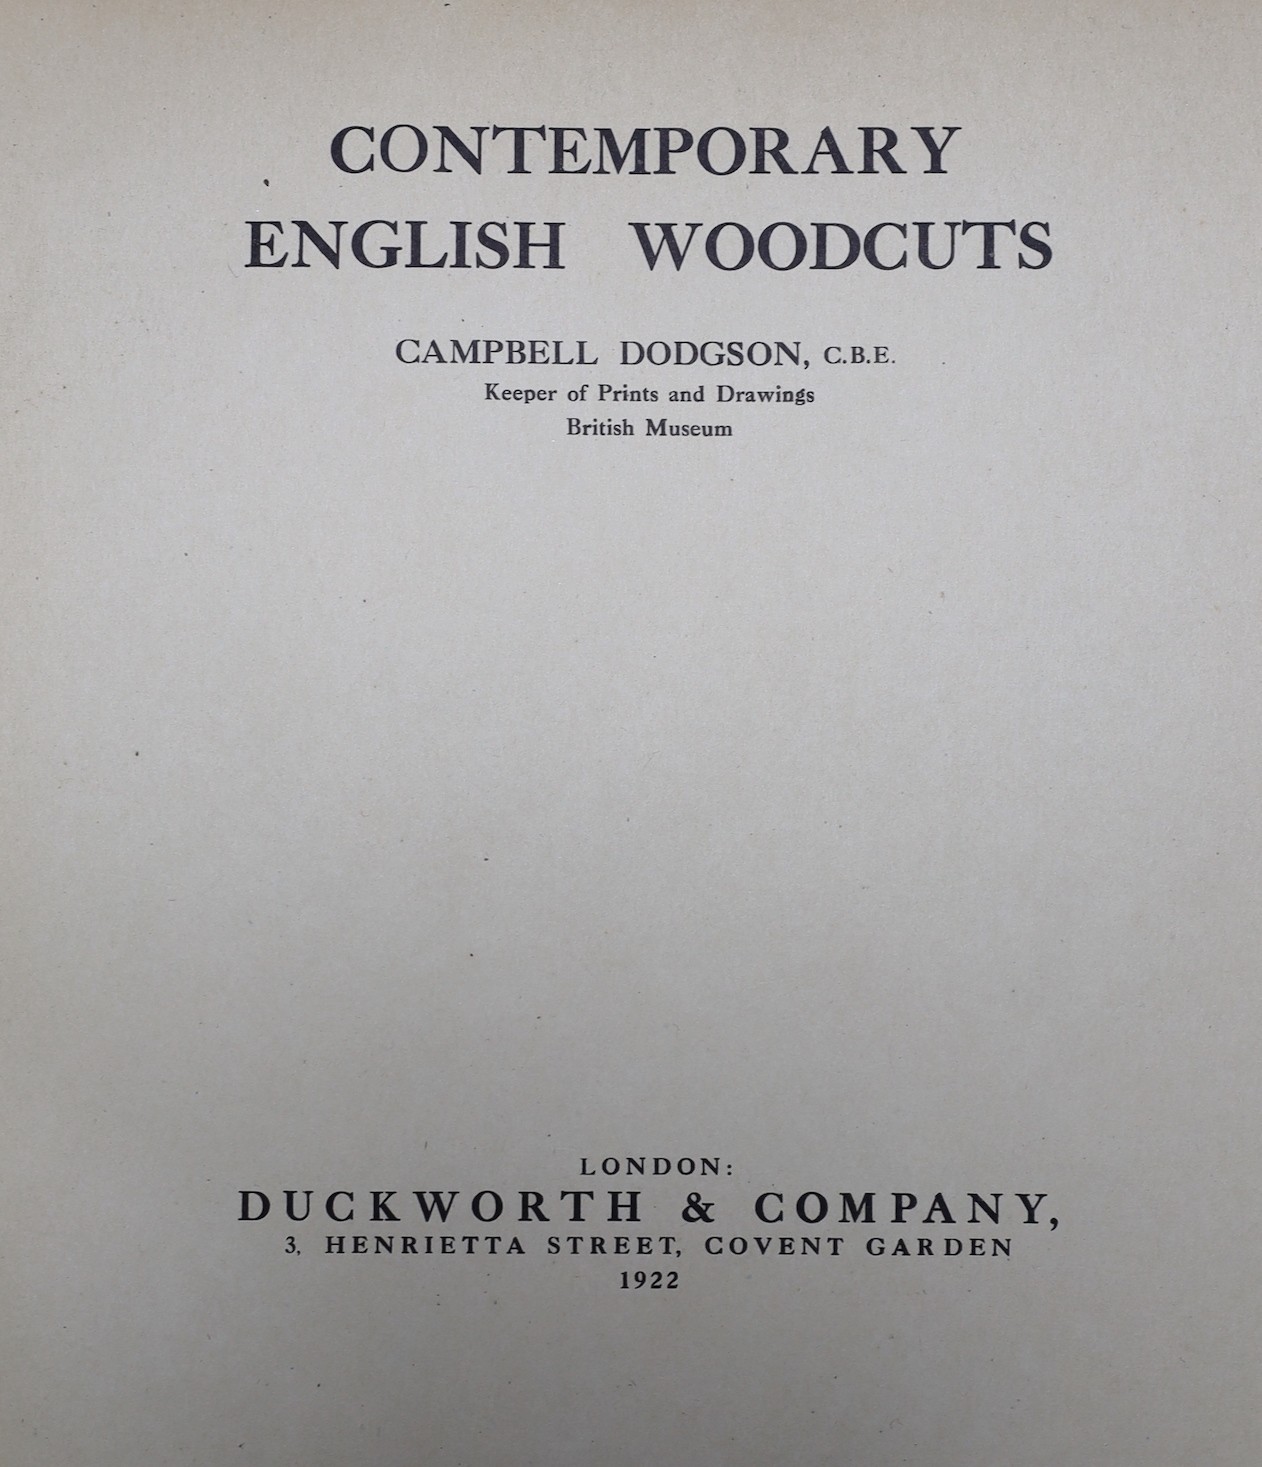 Dodgson, Campbell - Contemporary English Woodcuts, one of 550, folio, original half cloth, with 27 woodcut plates, Duckworth & Company, London, 1922